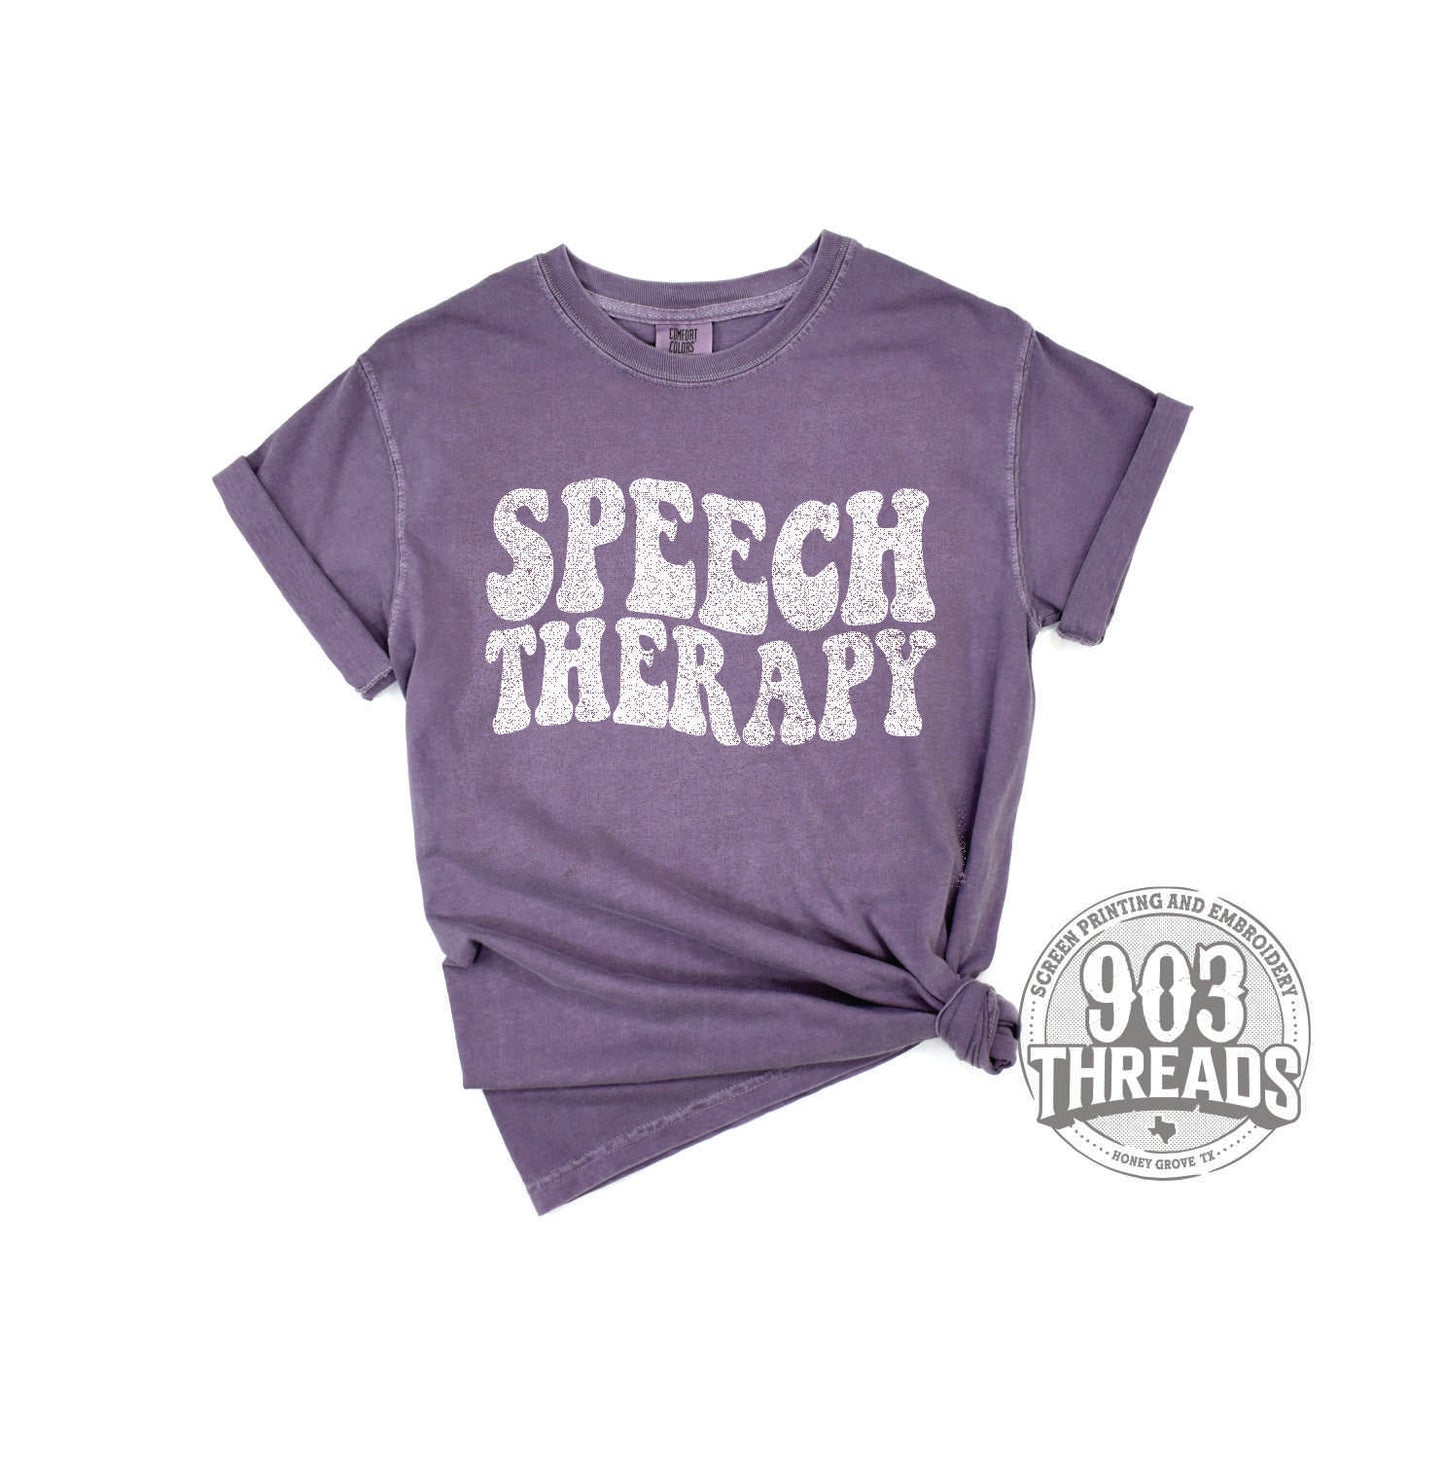 Speech Therapy Groovy Tee